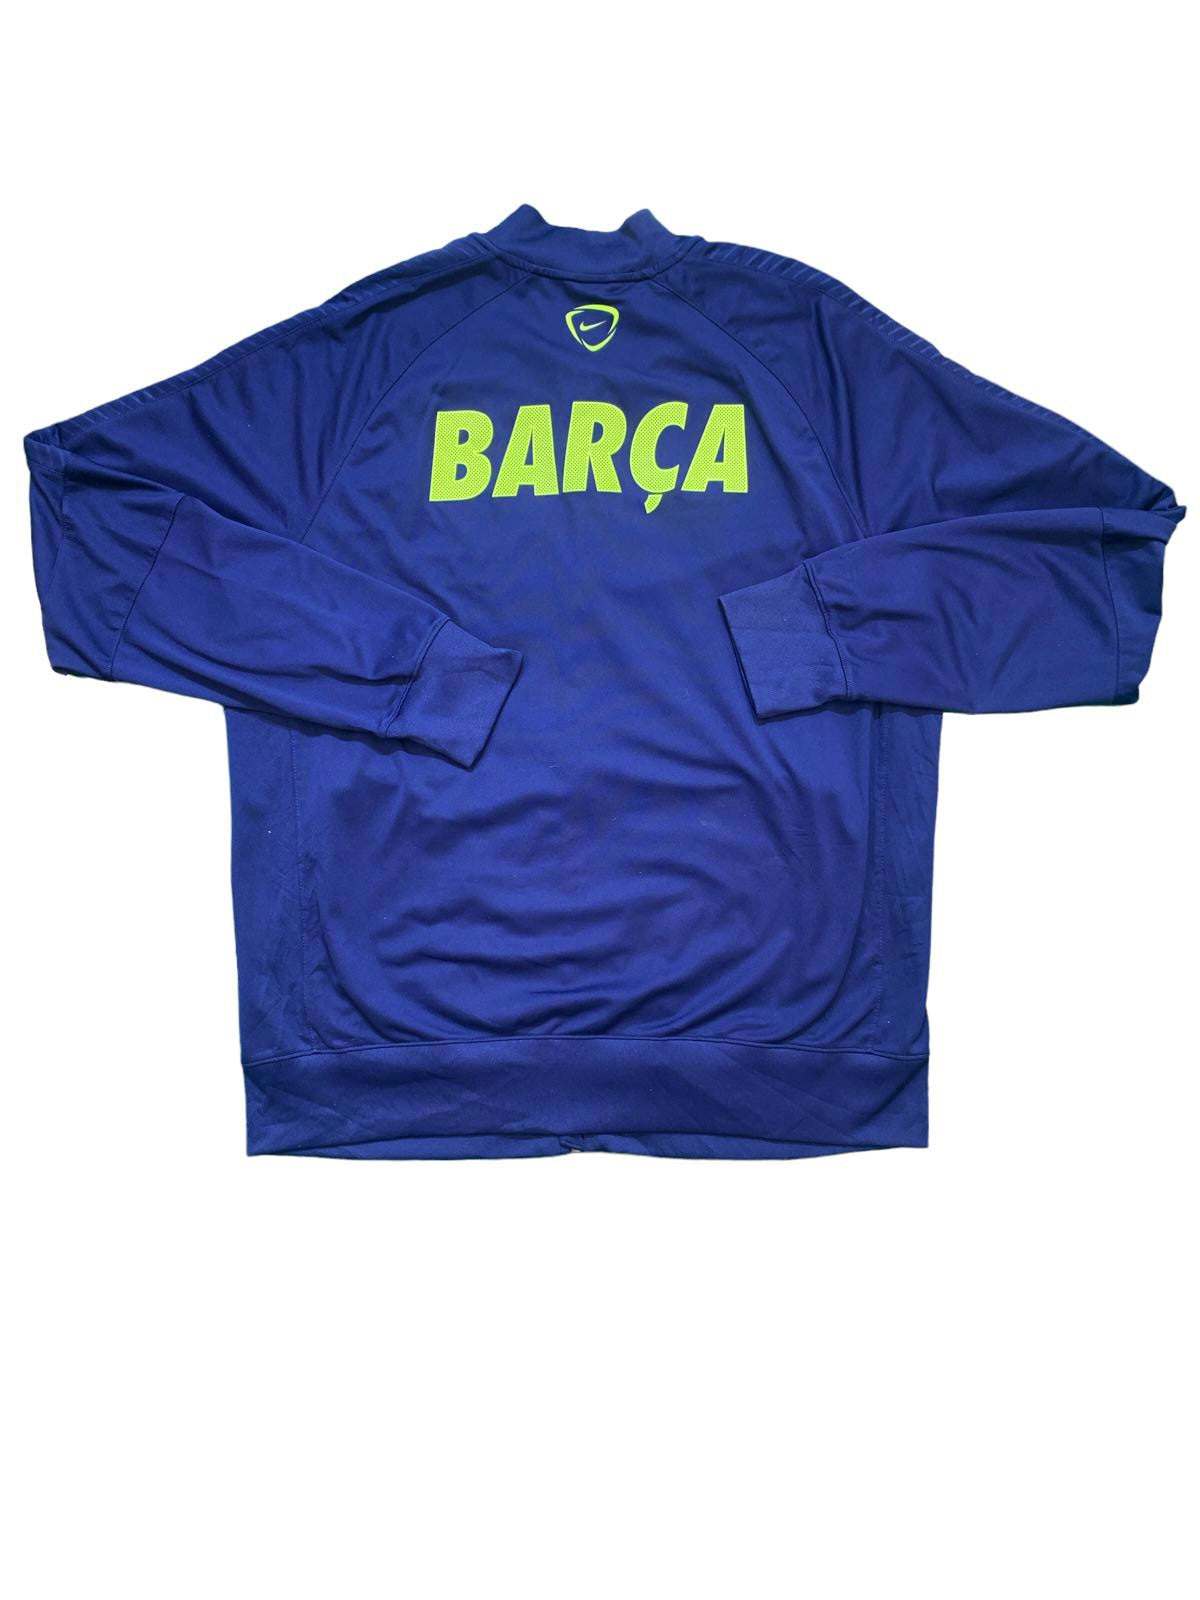 Mens Nike Barcelona Track Jacket - XL